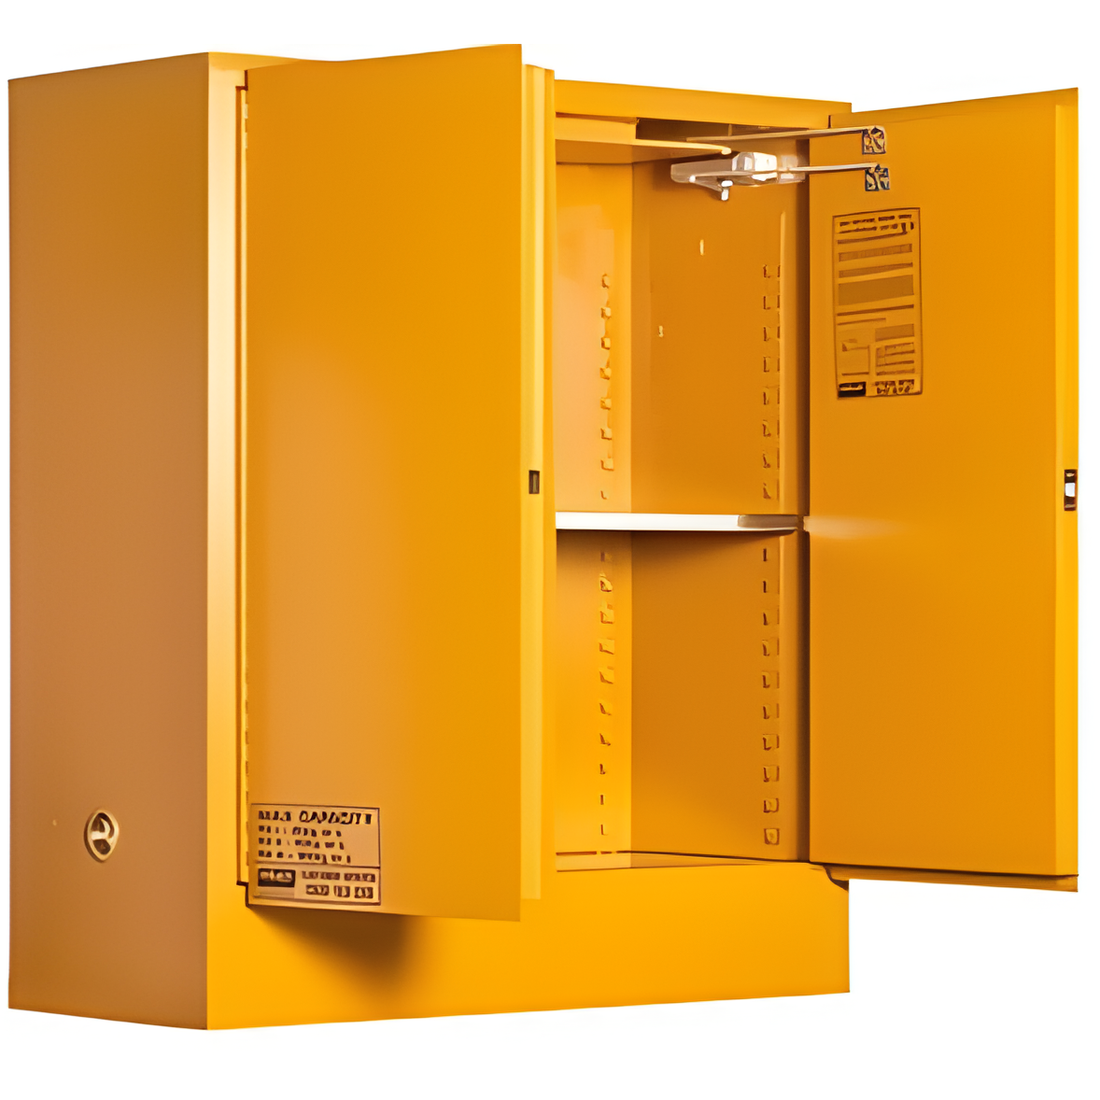 160l-toxic-storage-cabinet